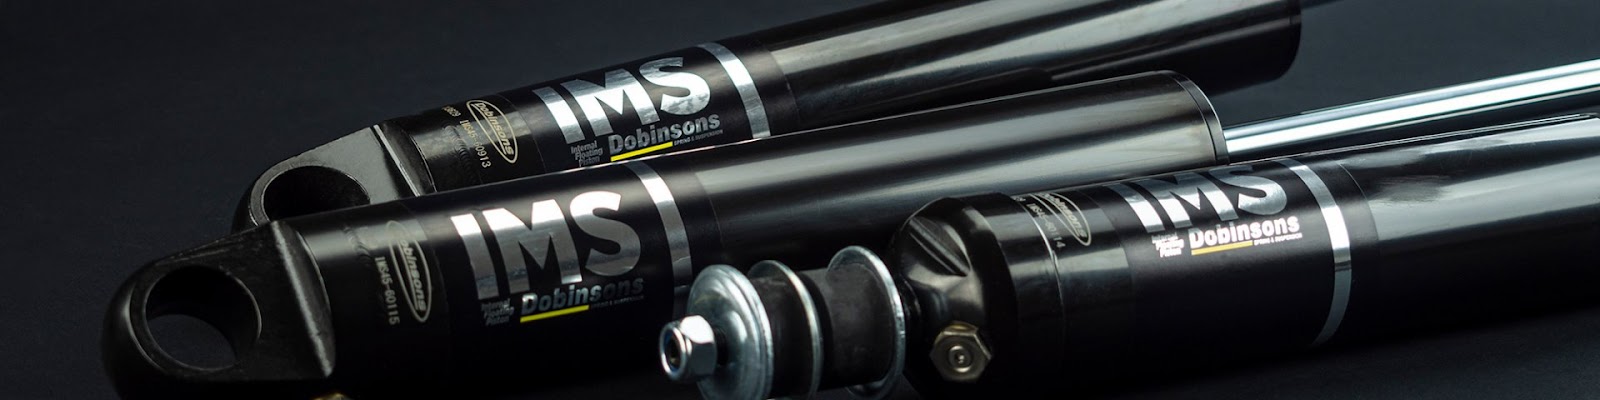 Dobinsons IMS Monotube Shocks for 80 Series - Internal resi Monotube Shocks  | IH8MUD Forum